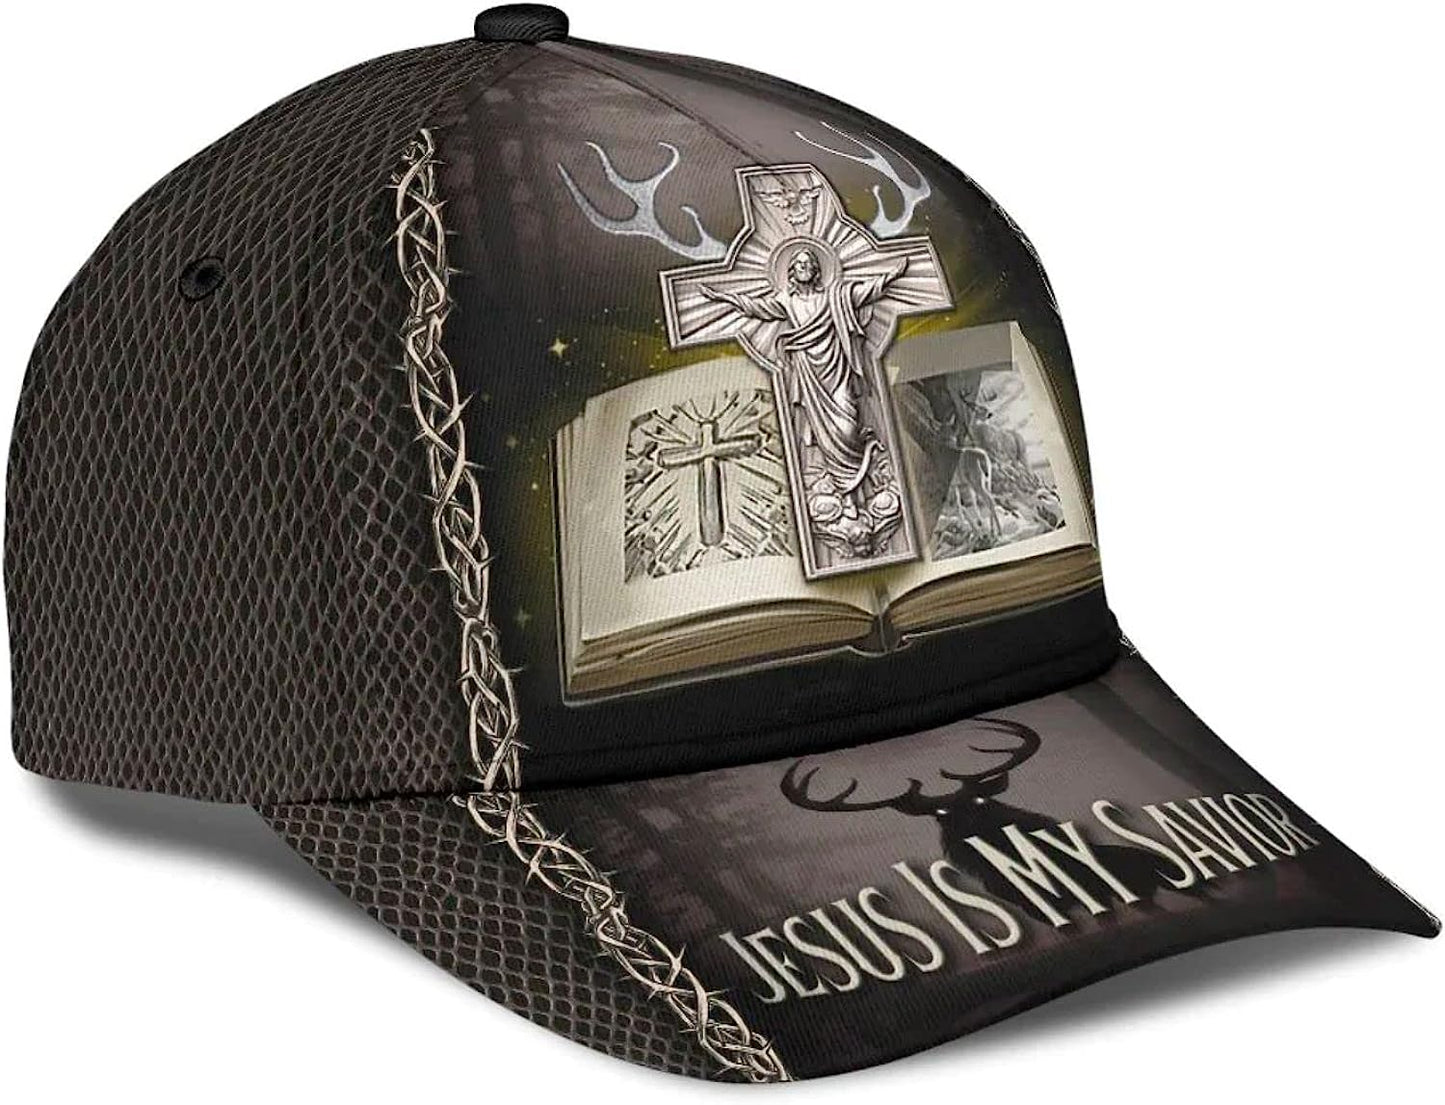 Hunting Jesus Is My Savior Baseball Cap - Christian Hats for Men and Women